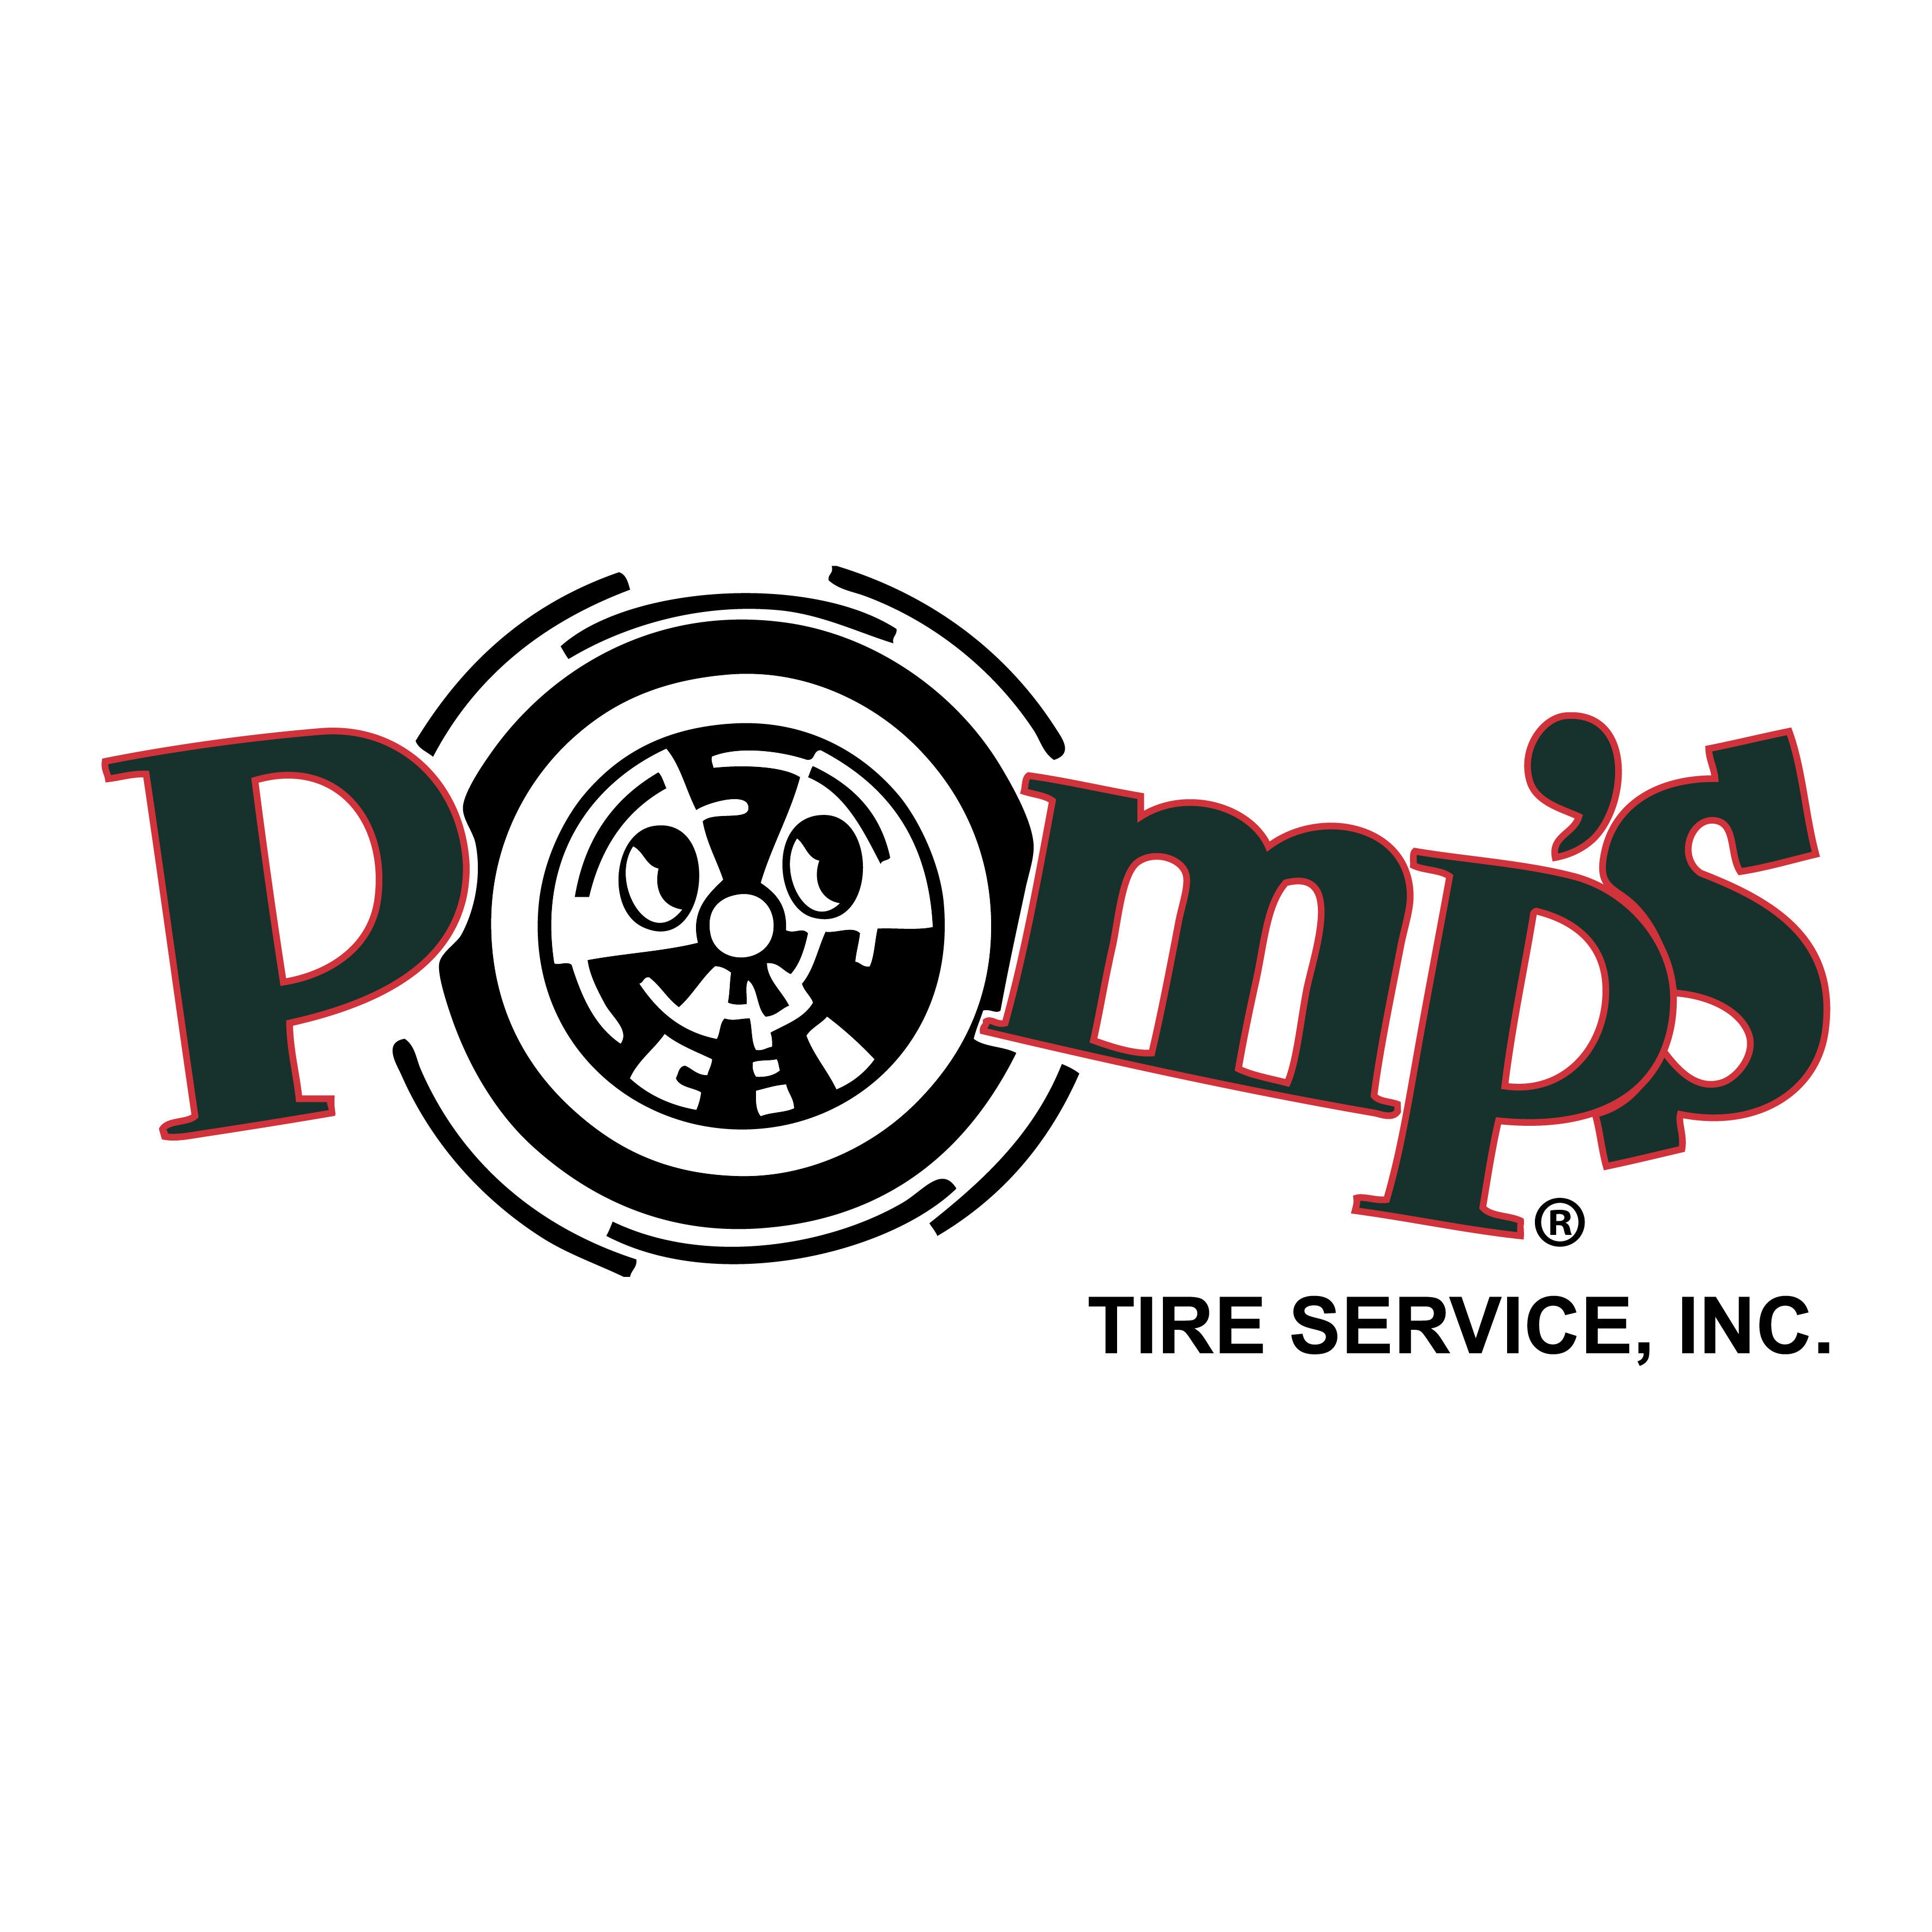 Pomp's Tire Service